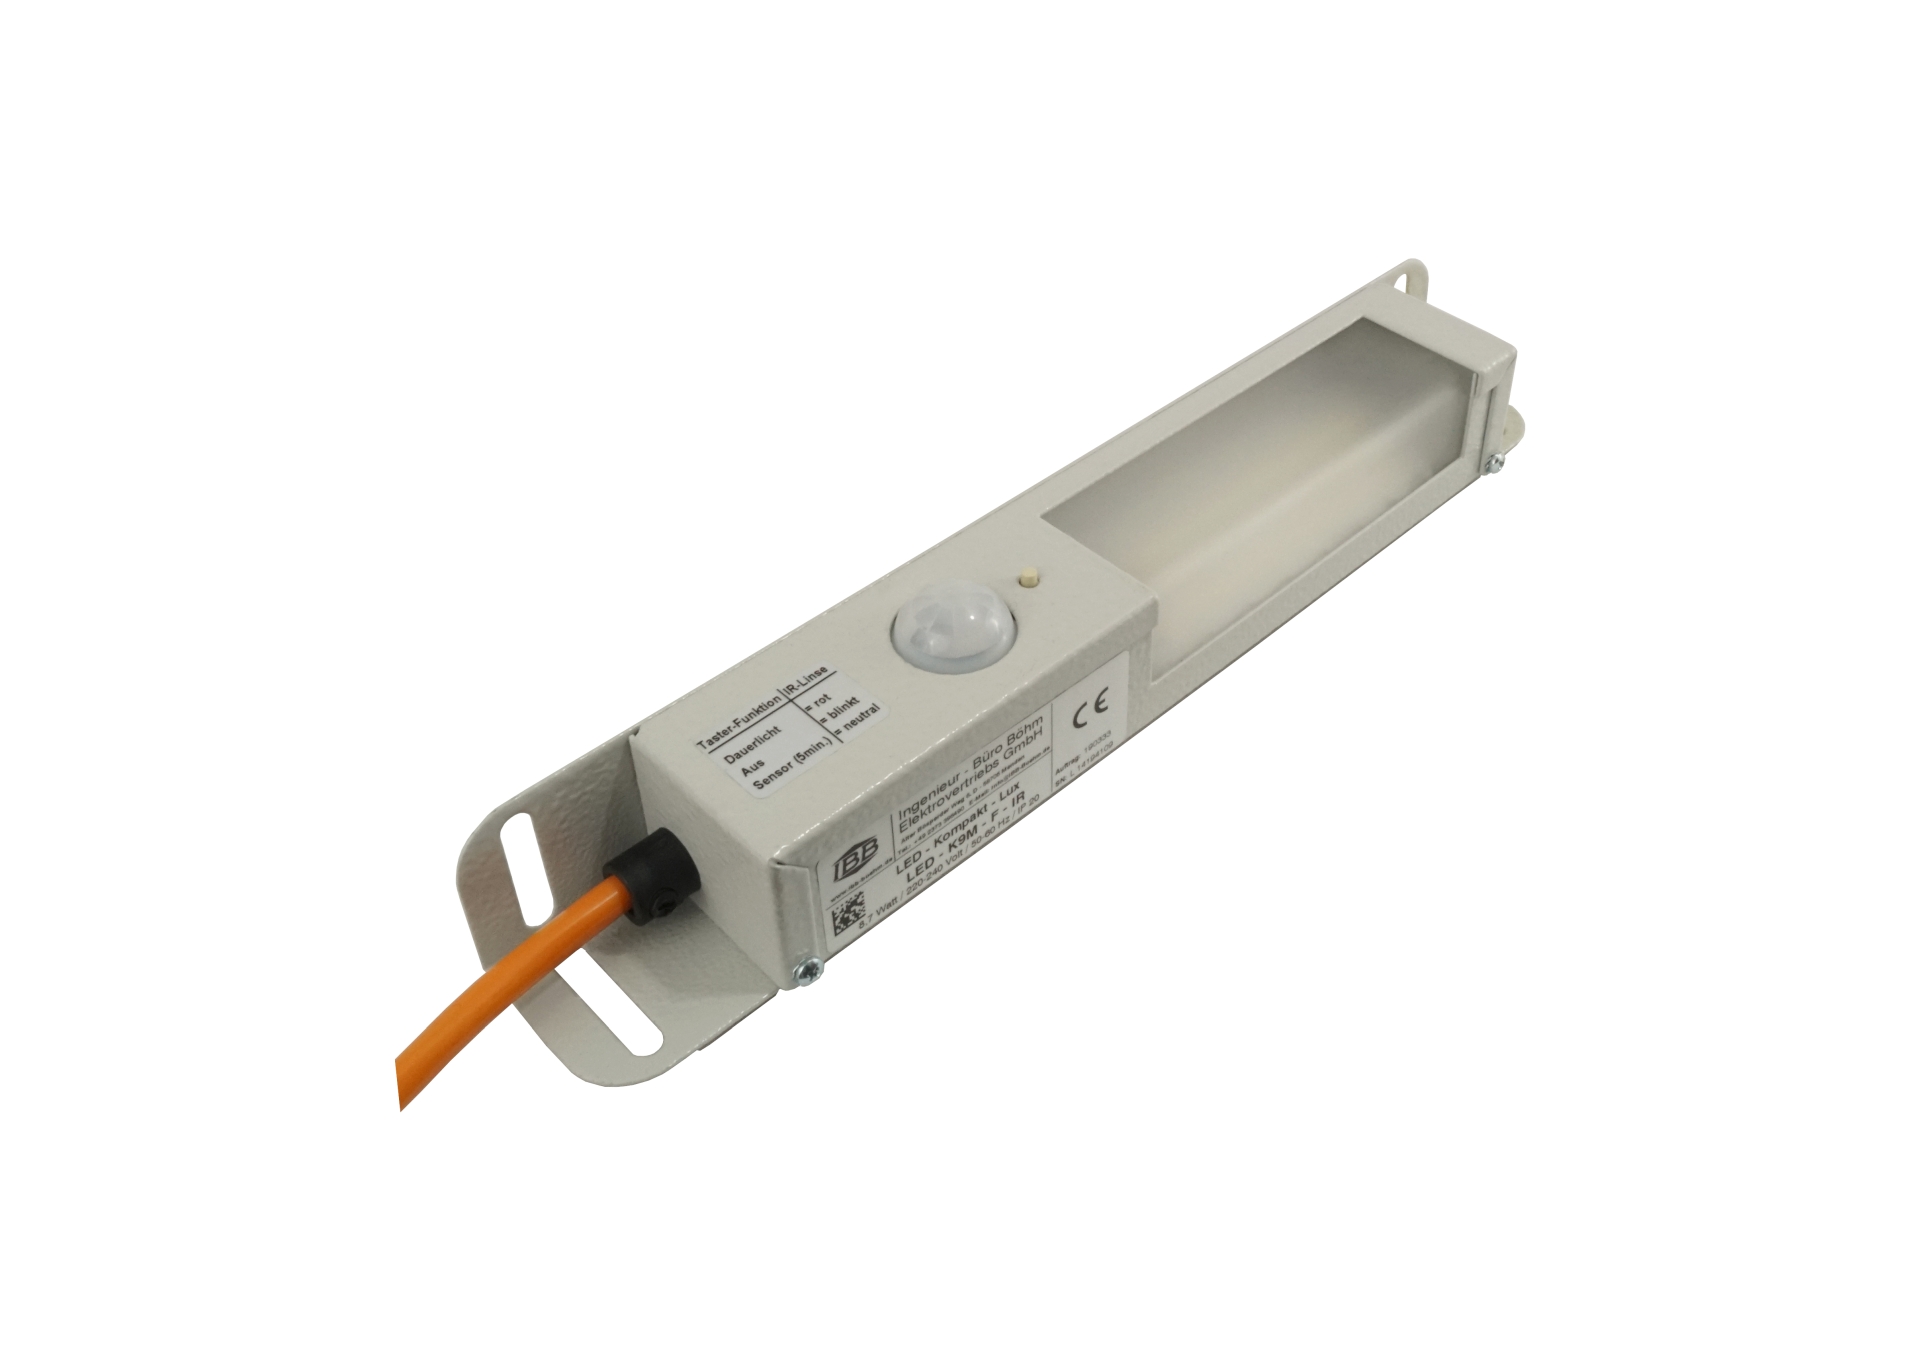 Abbildung LED-Kompakt-Lux 8 Watt, 220-240 Volt / 50/60 Hz | Magnetbefestigung, ab 300mm Gehäusebreite